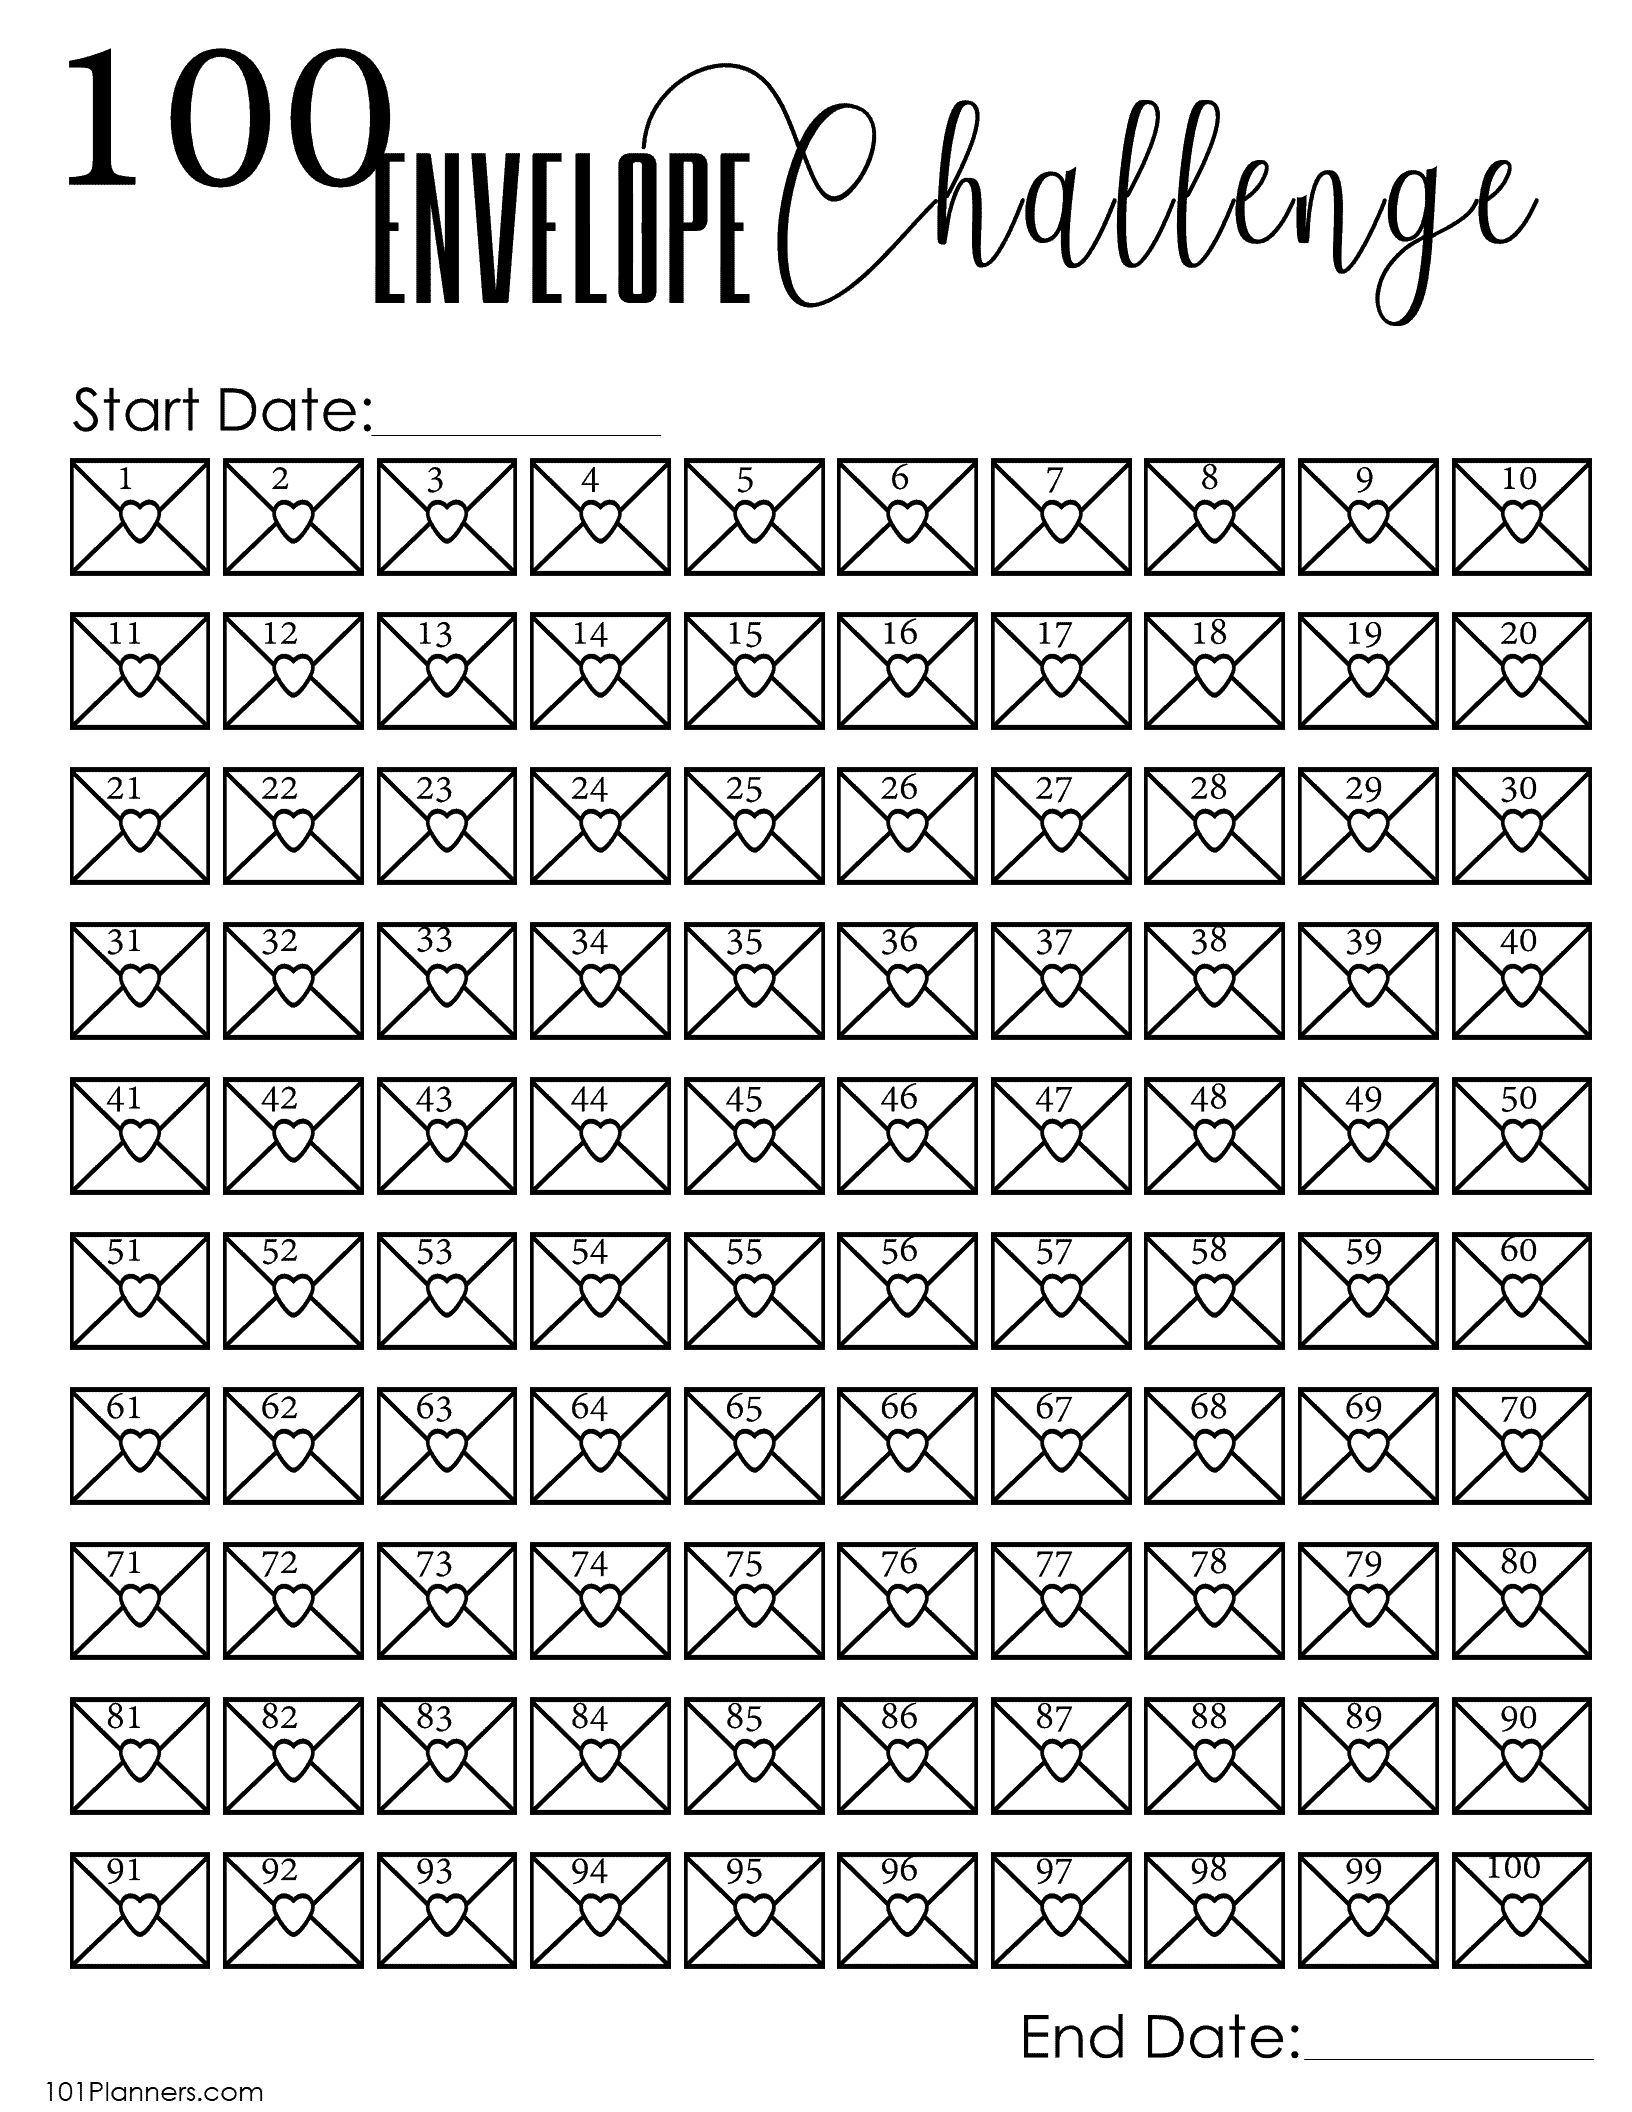 1 through 100 envelope challenge